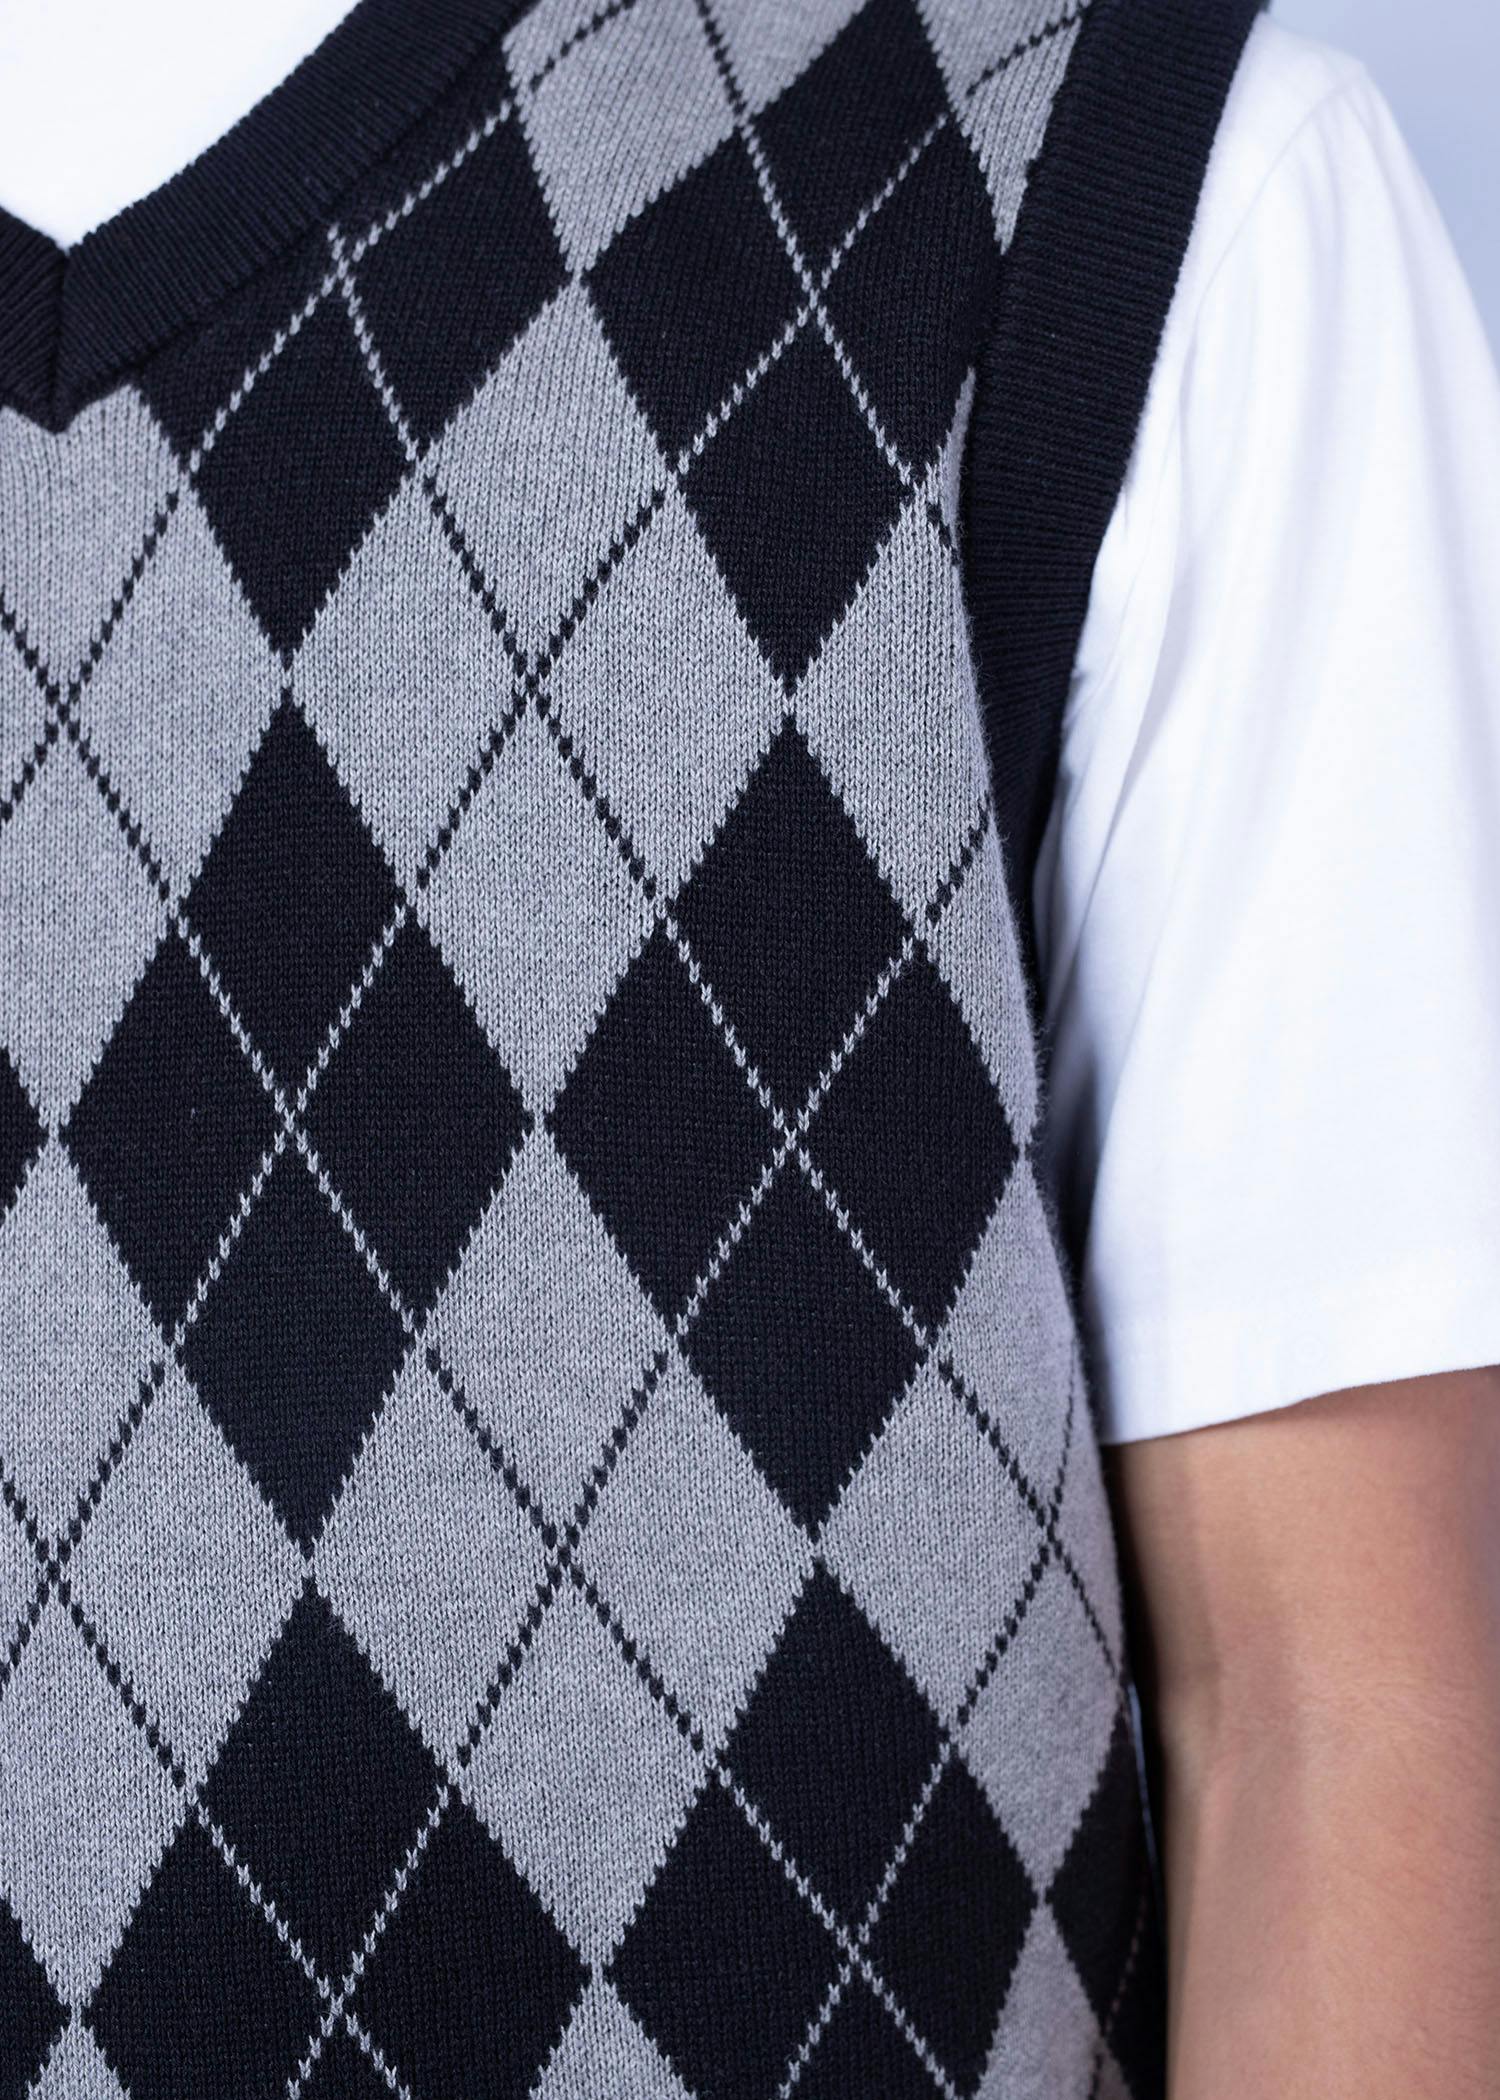 mardin vest sweater black grey color close front view